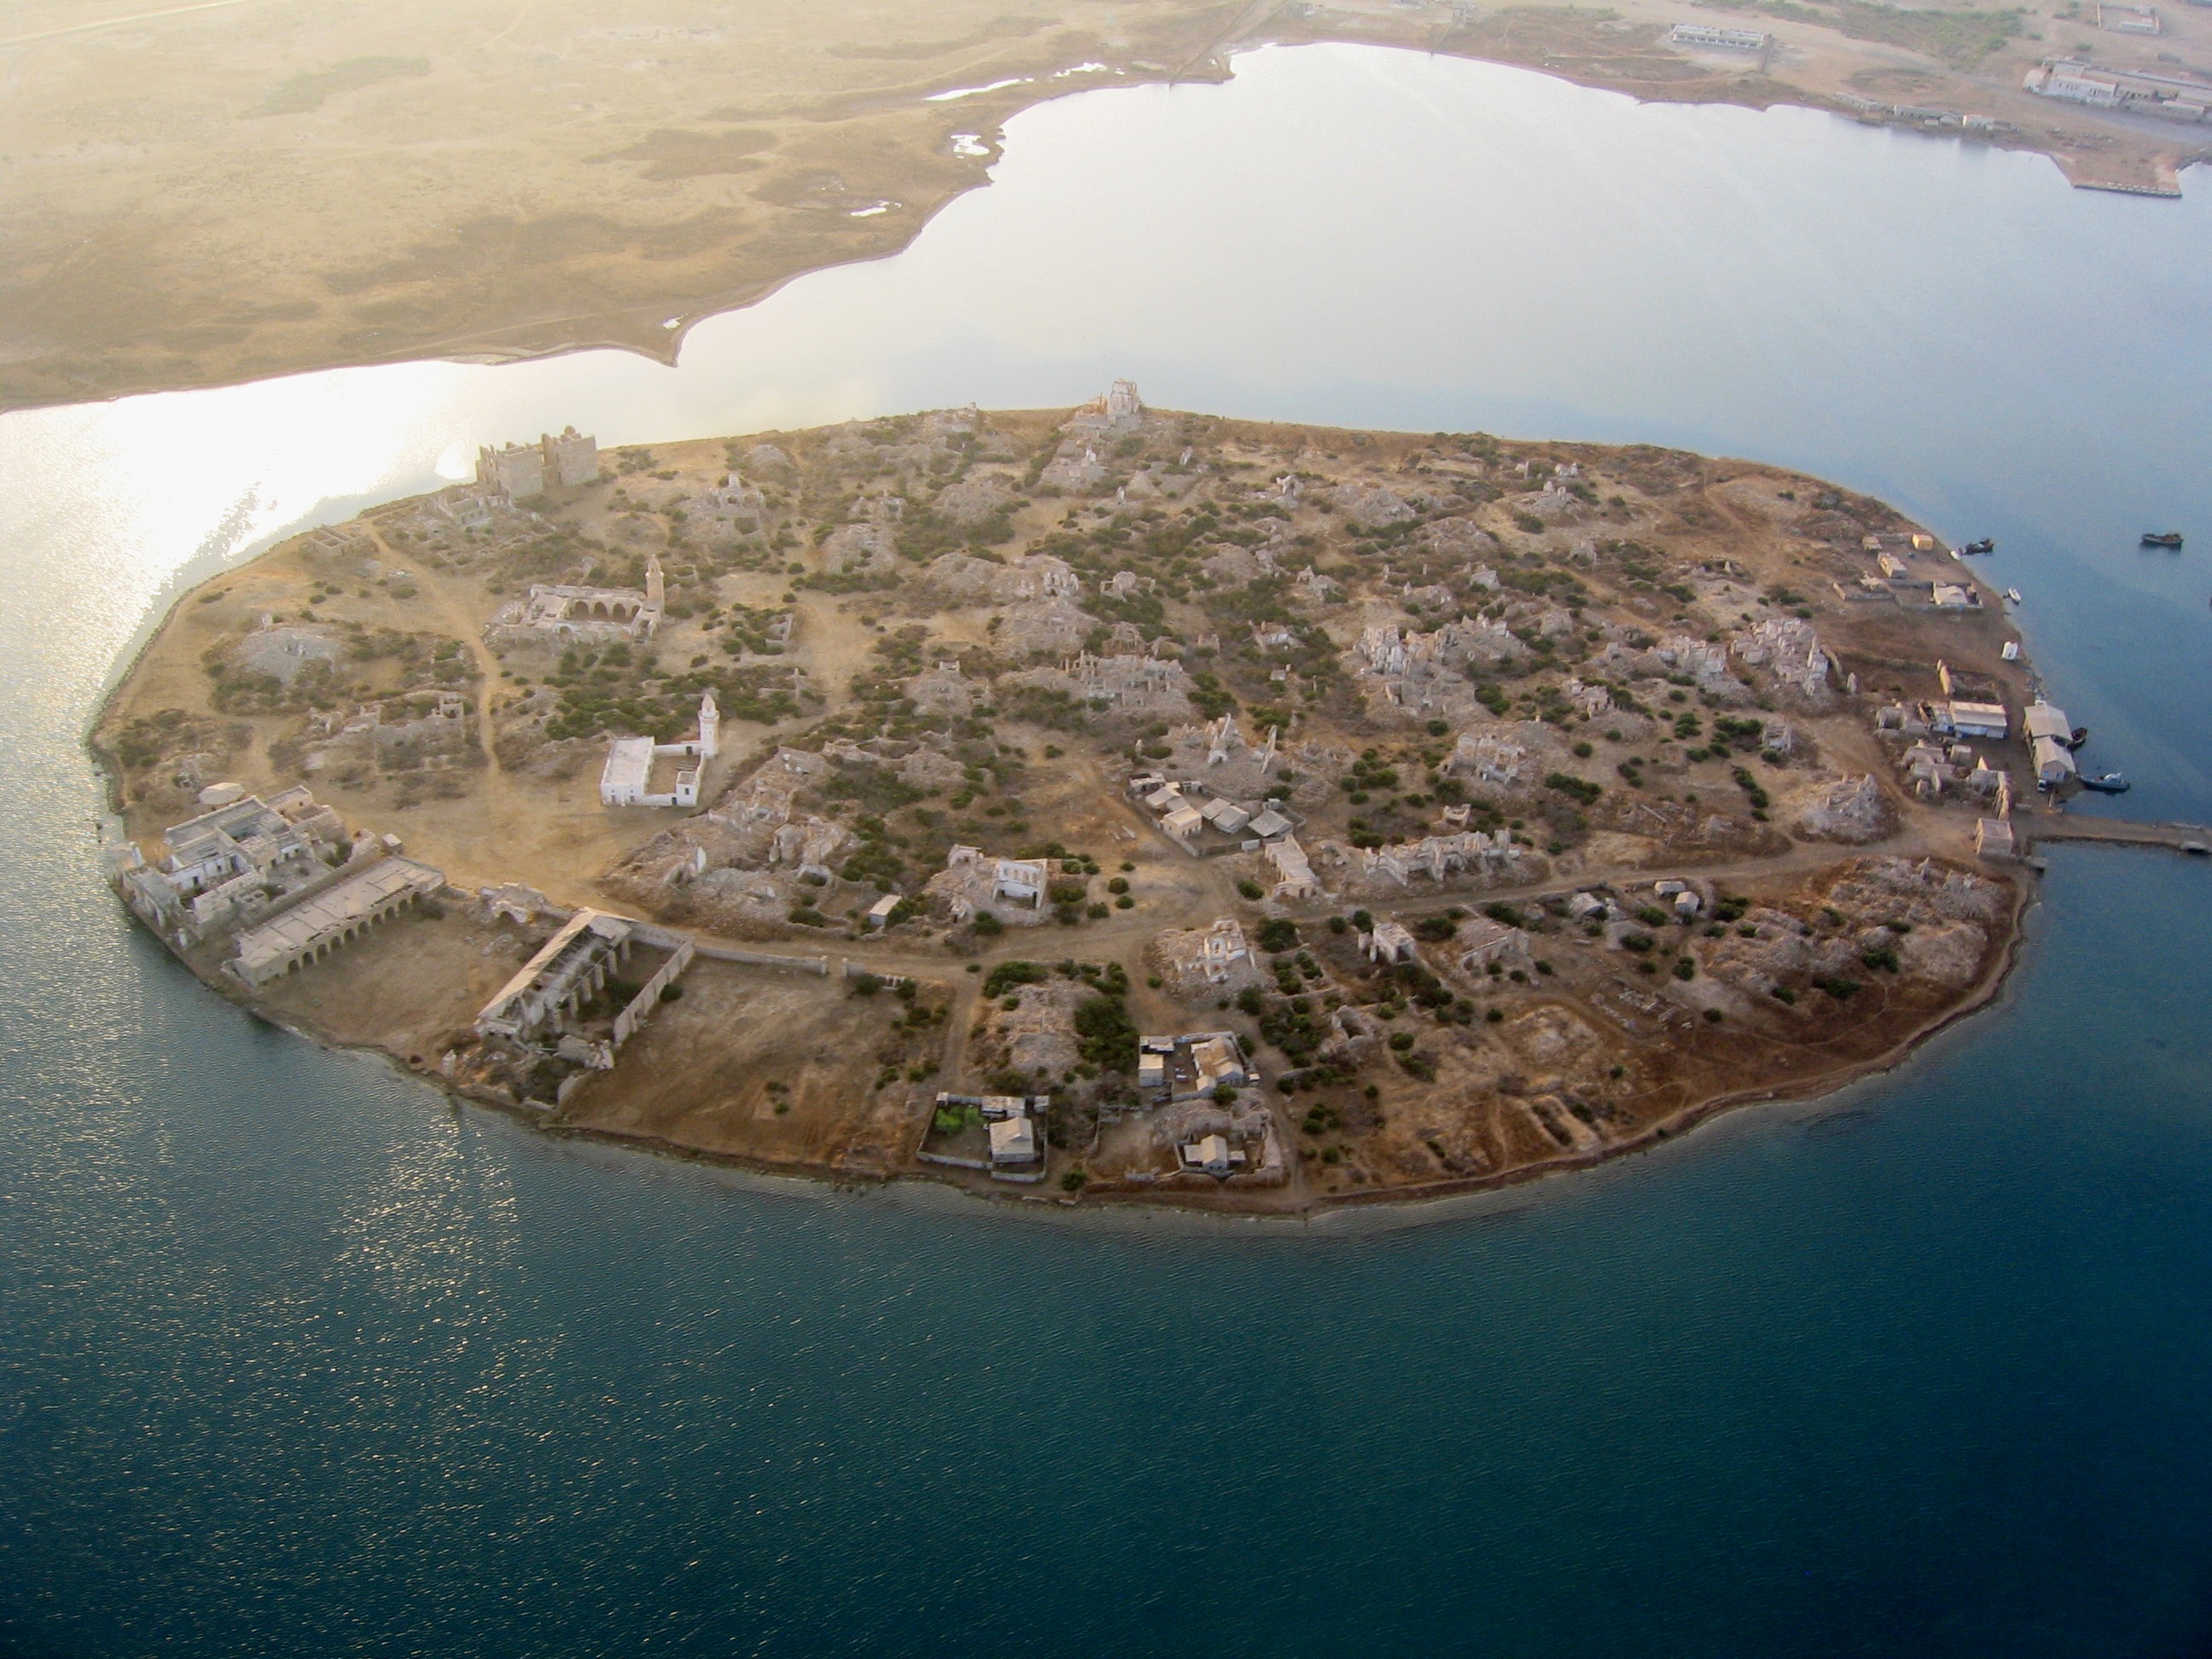 bombed island resort in eritrea